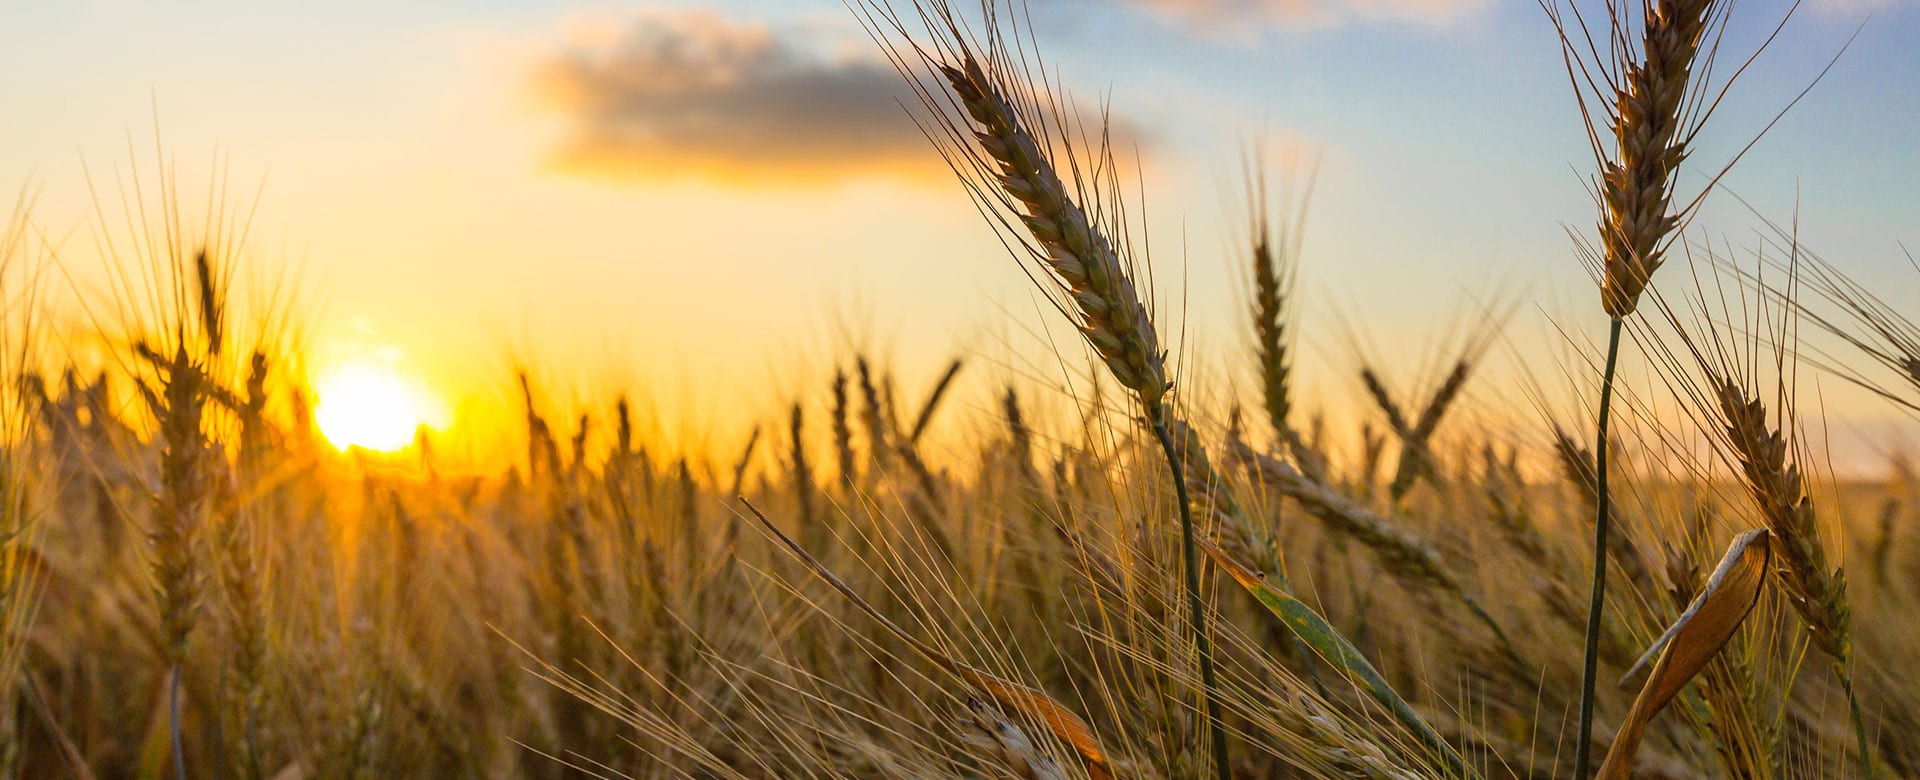 Sunsetting on wheat field